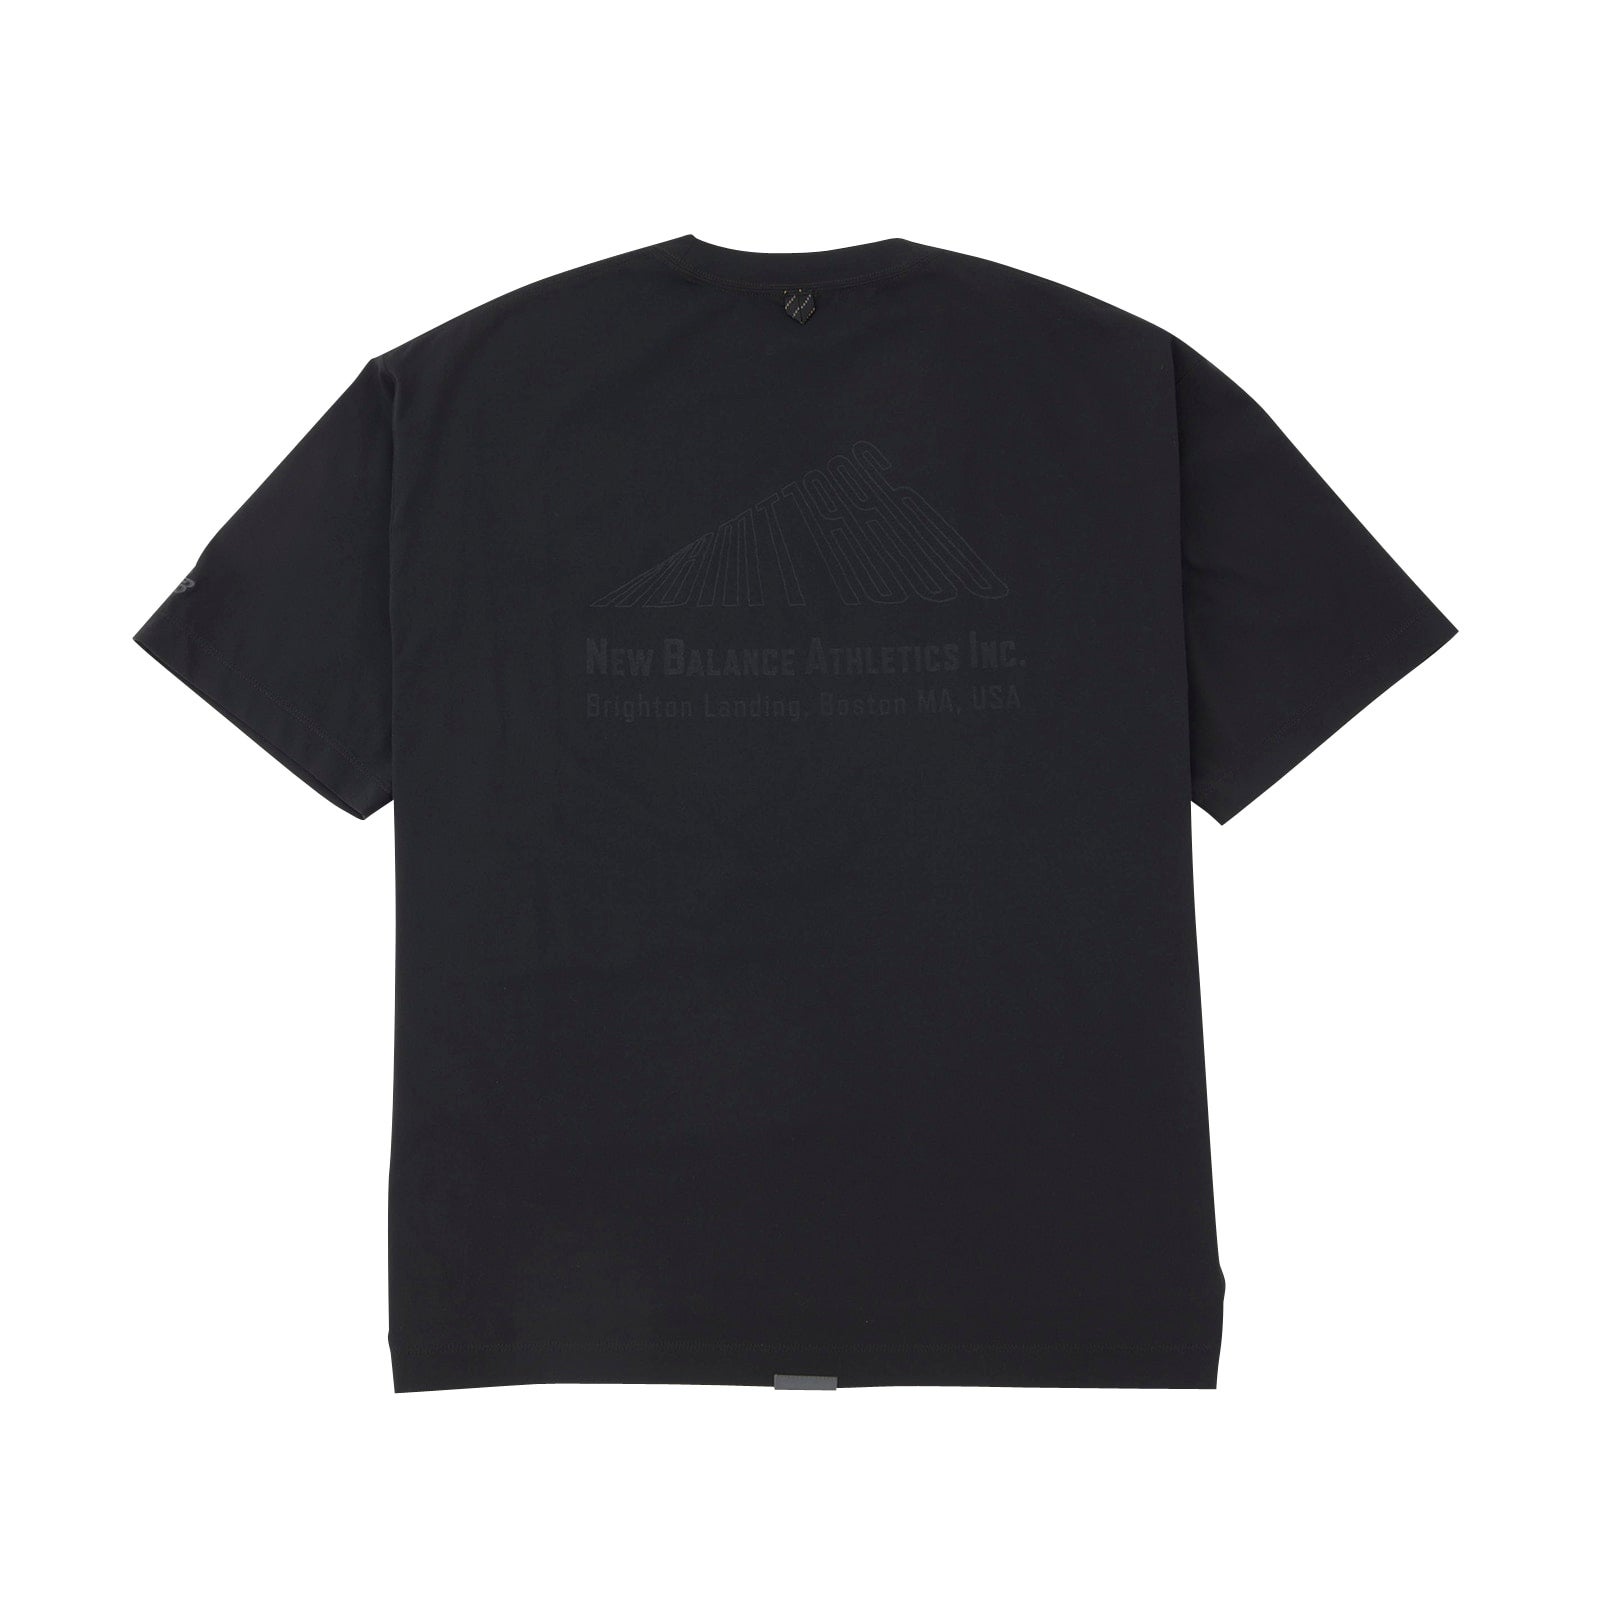 MT1996 Sunshield T-shirt